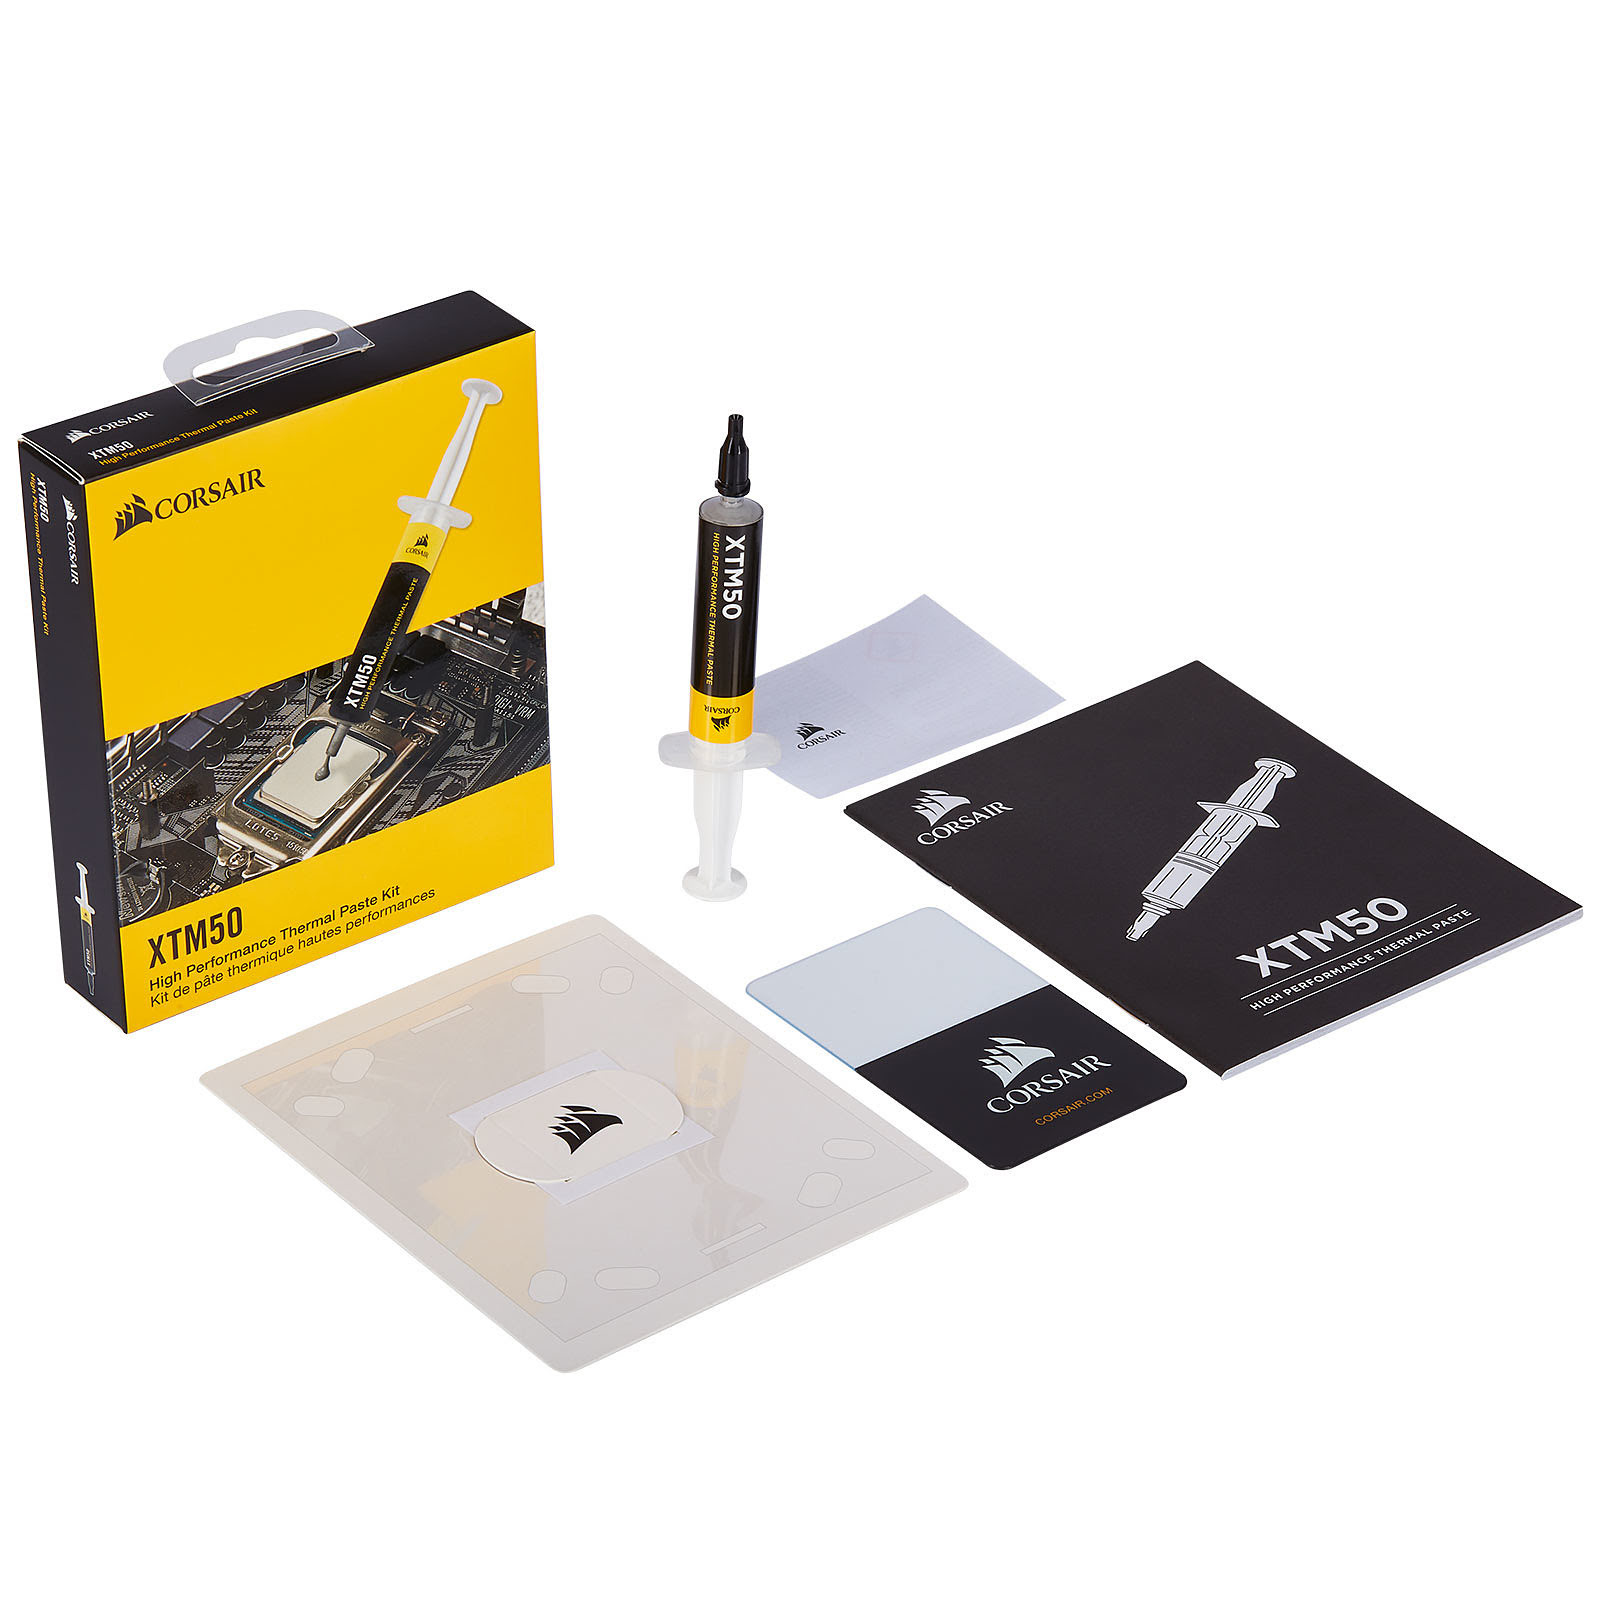 XTM50 High Performance Thermal Paste Kit 5 grammes - Corsair CT-9010002-WW - 0